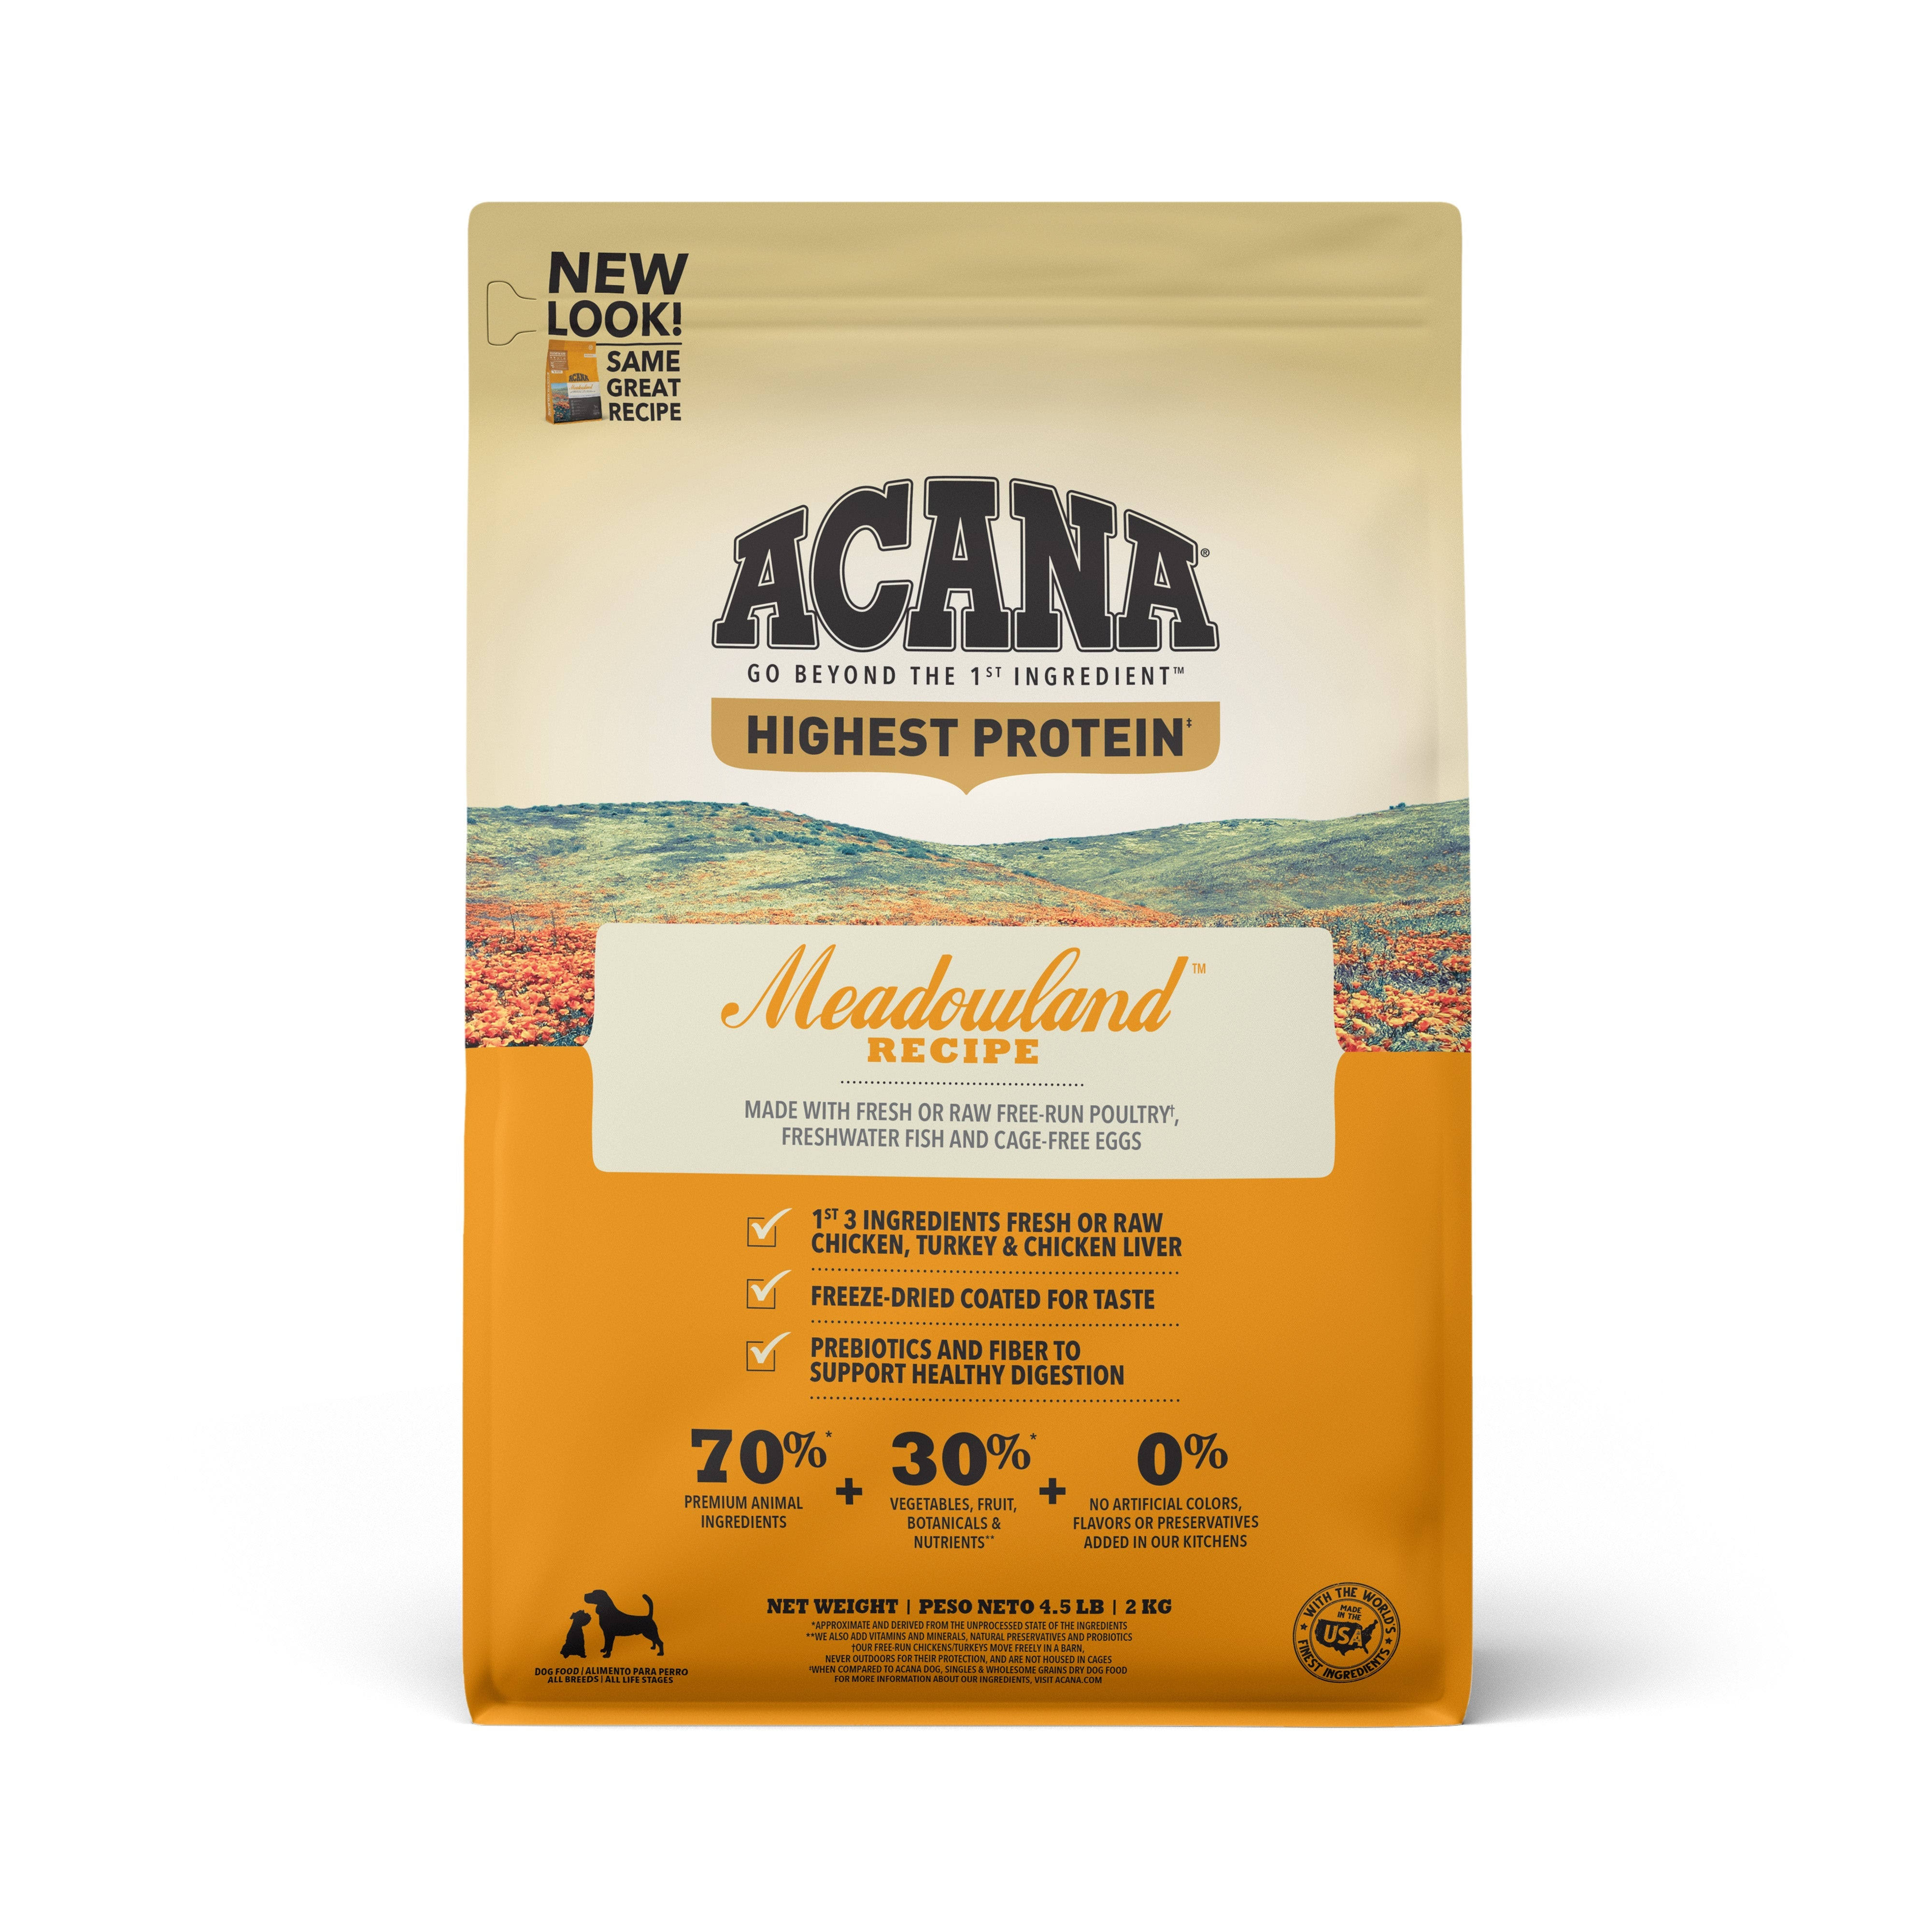 Acana Meadowland Dry Dog Food - 2kg